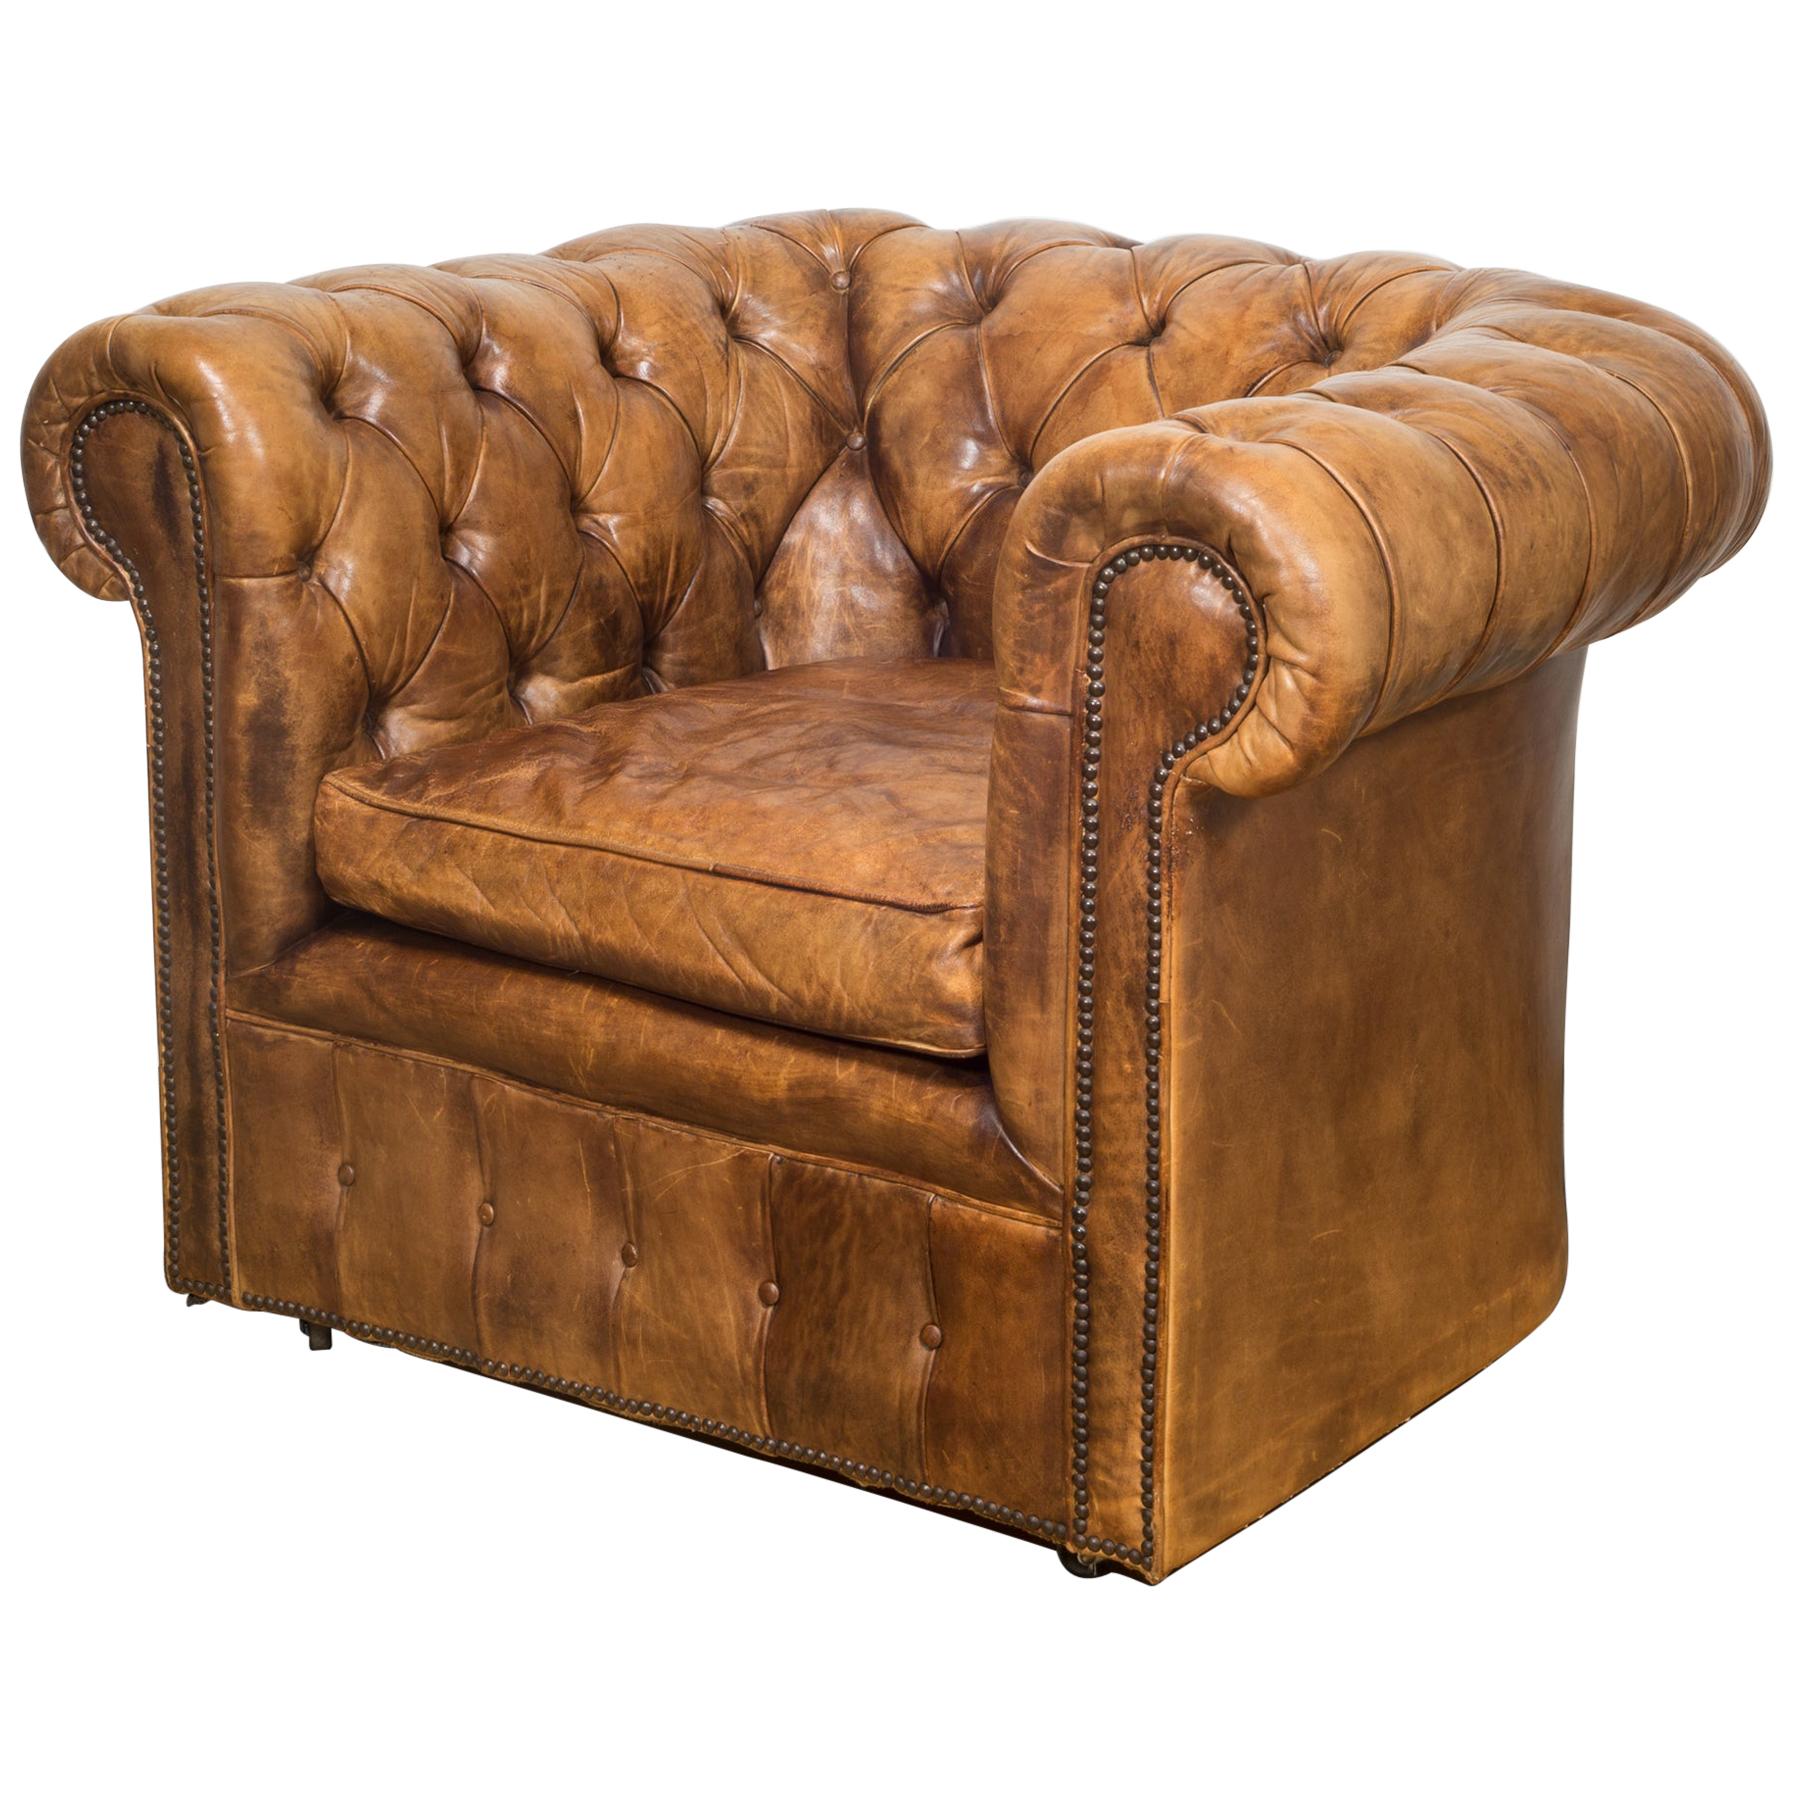 Leather Chesterfield Club Chair, circa 1950-1970